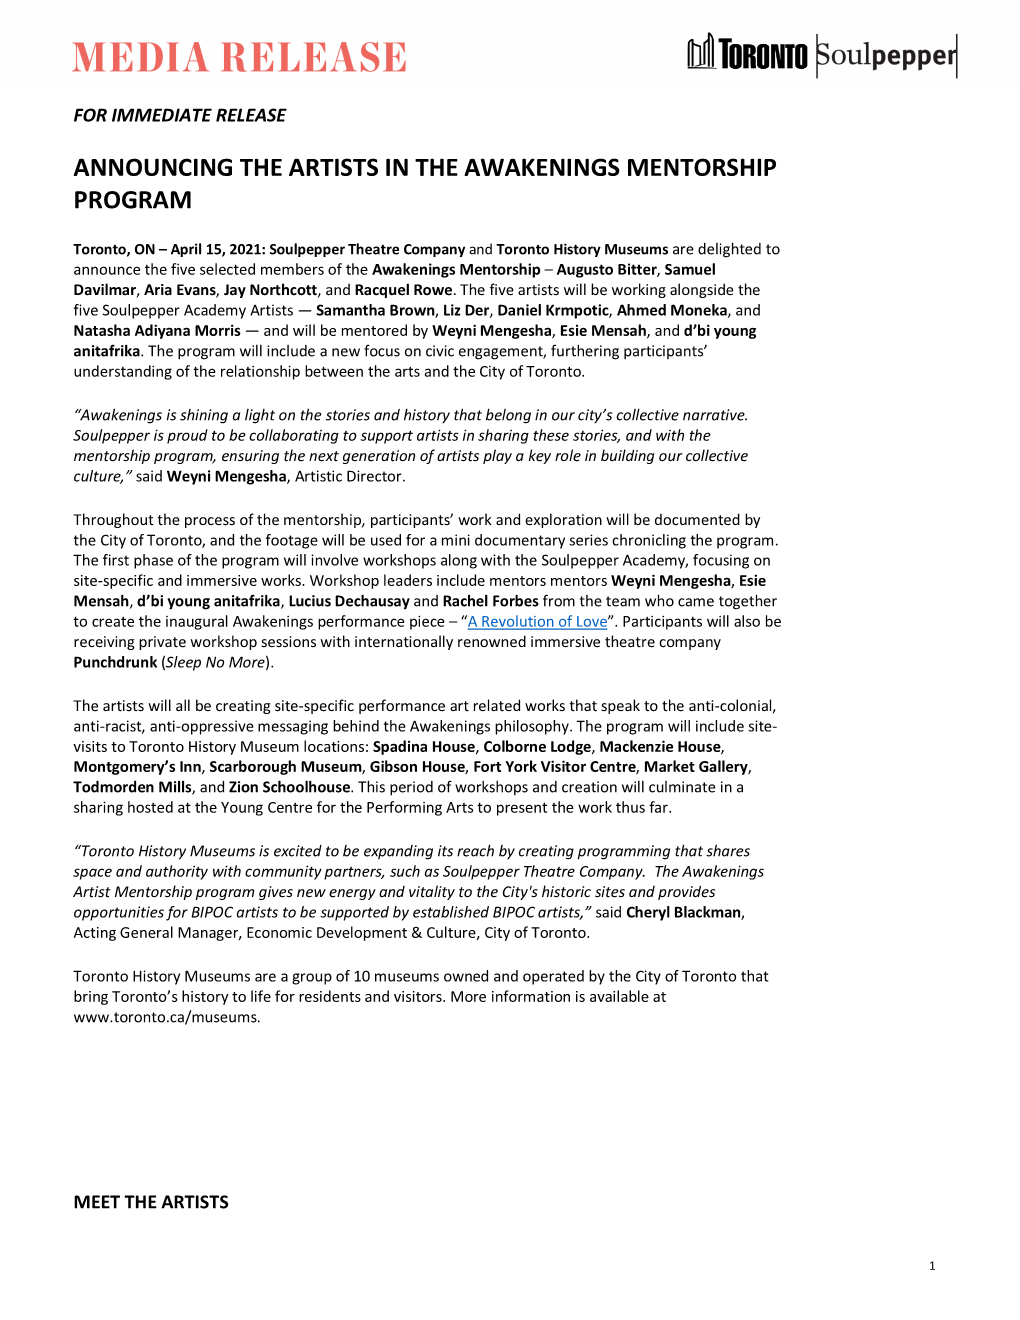 Announcing the Artists in the Awakenings Mentorship Program